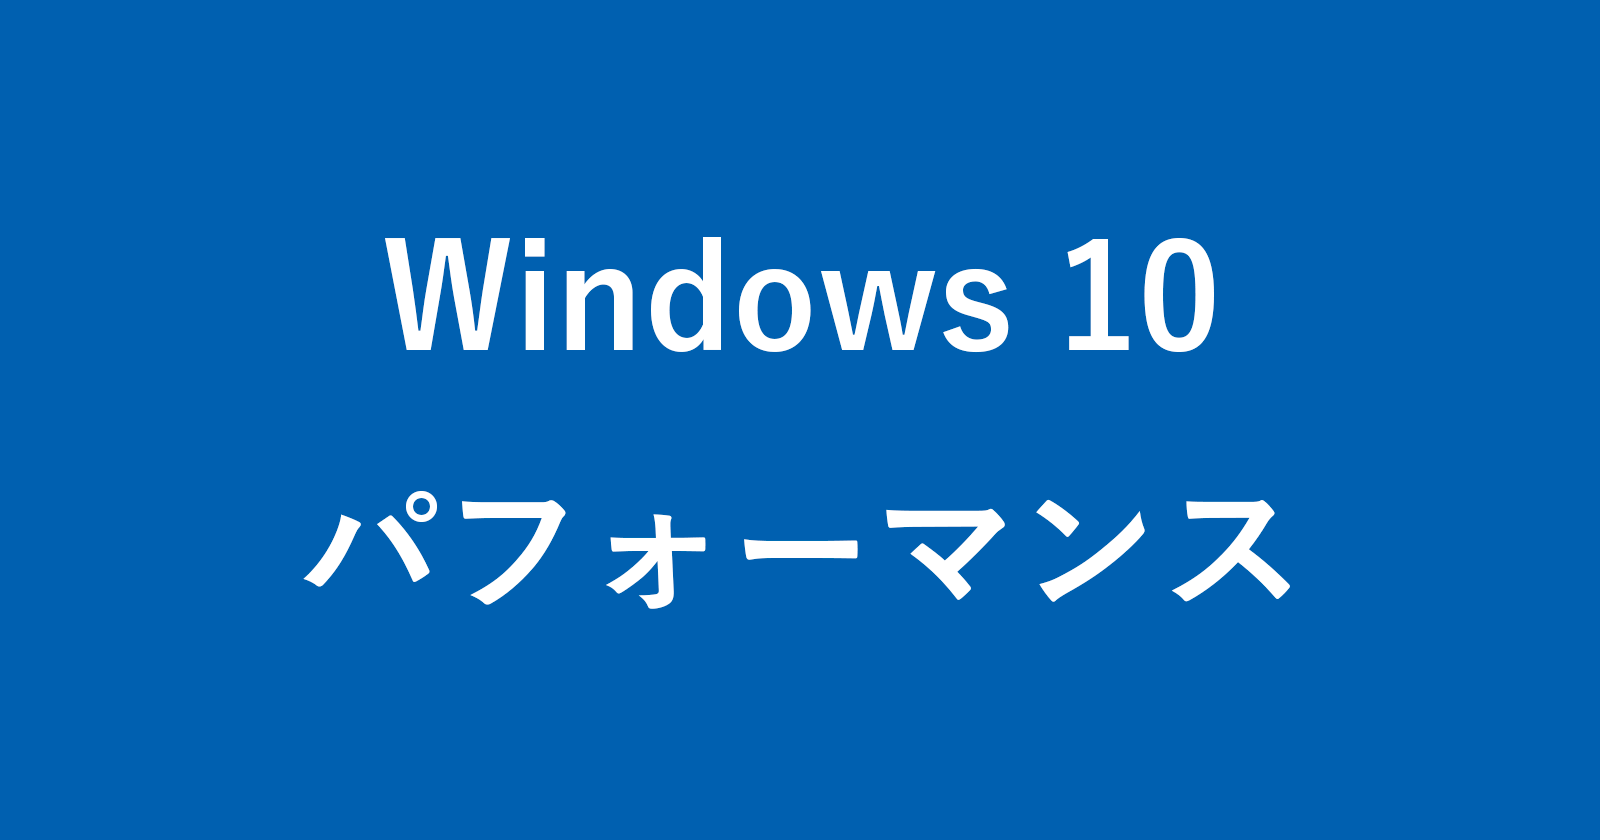 windows 10 performance